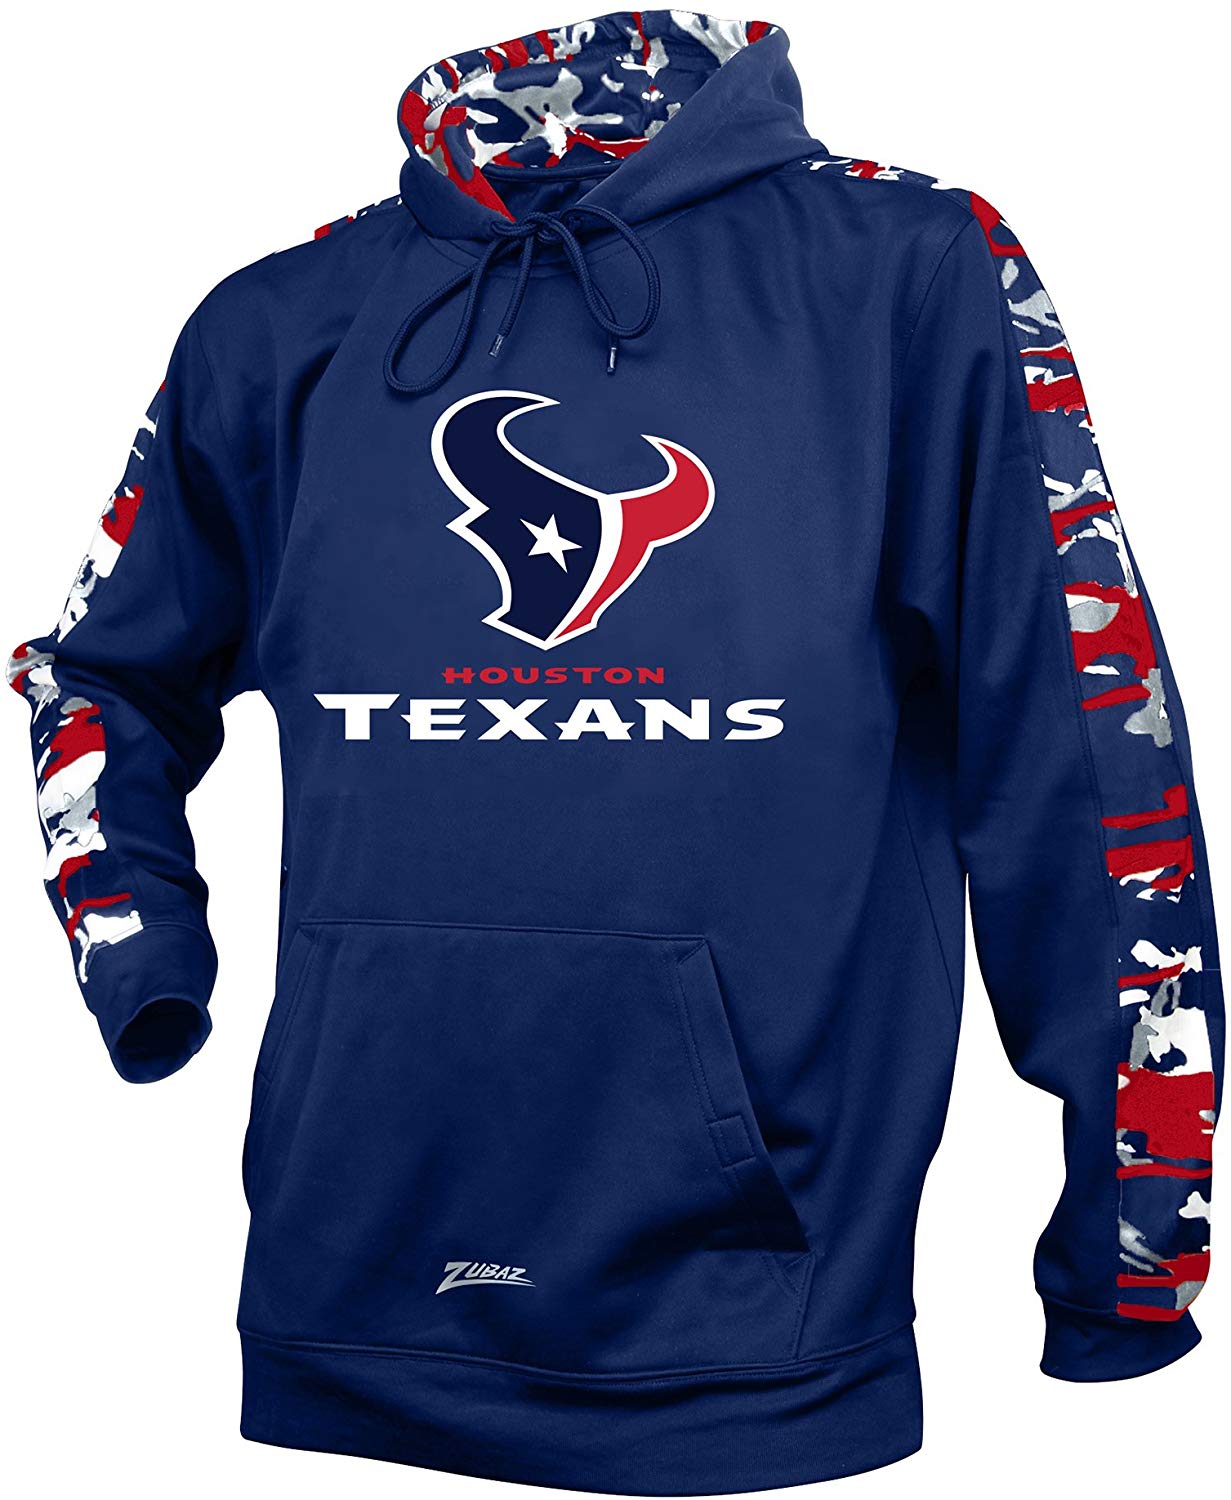 Zubaz NFL Men's Houston Texans Pullover 